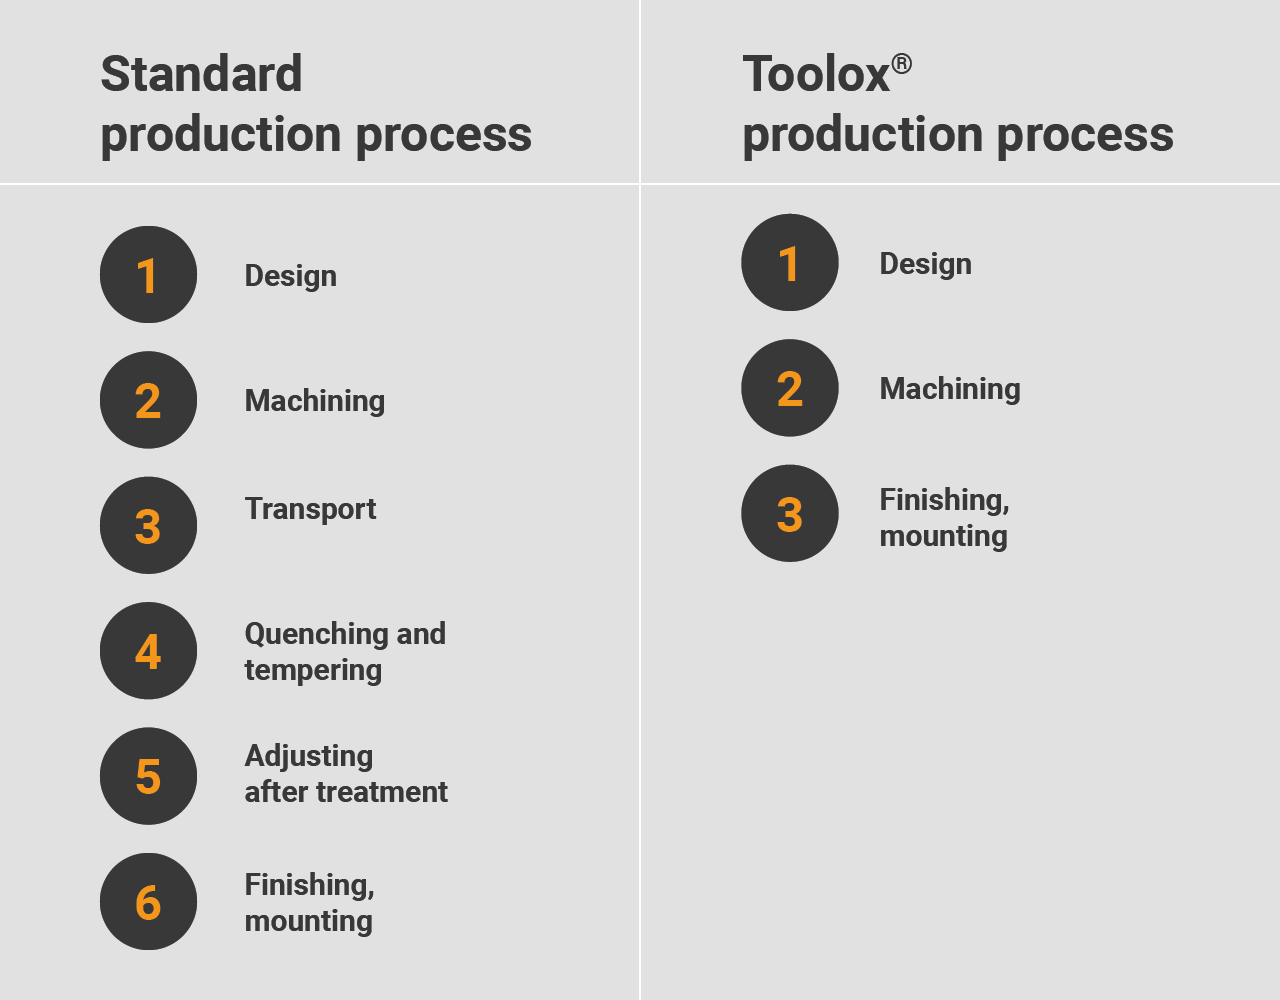 Production process Toolox vs standard